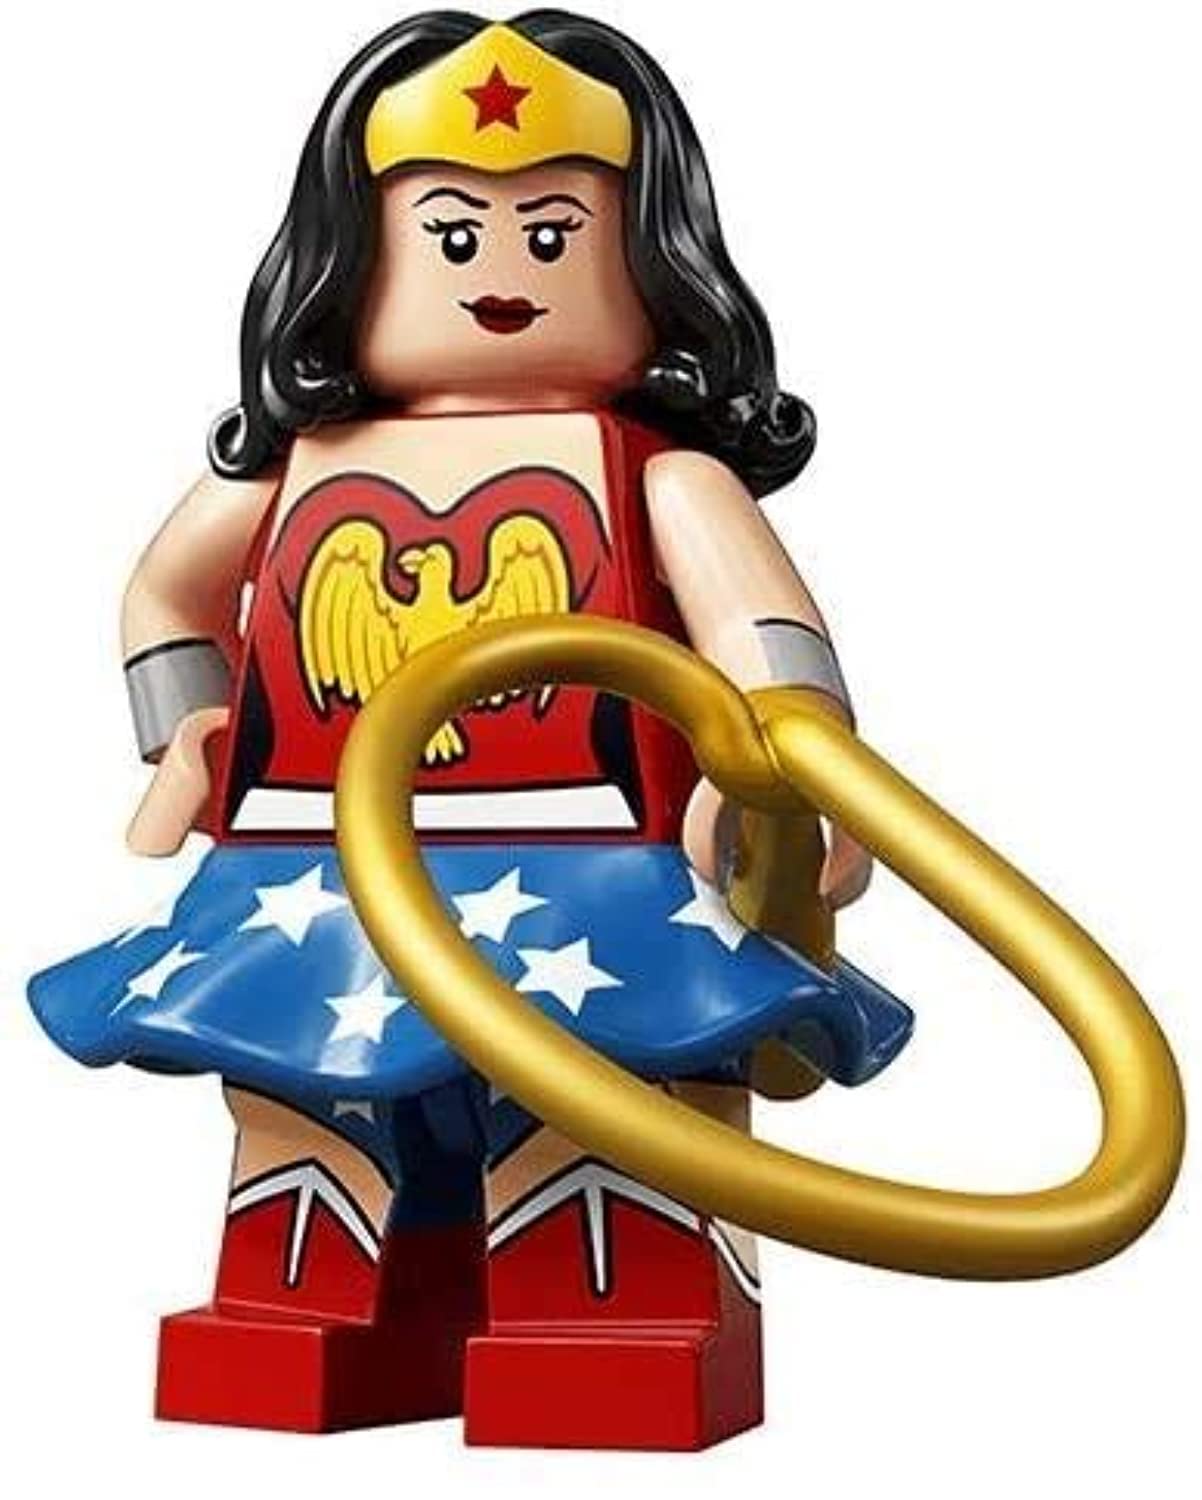 LEGO DC Super Heroes Series: Wonder Woman Minifigure (71026)